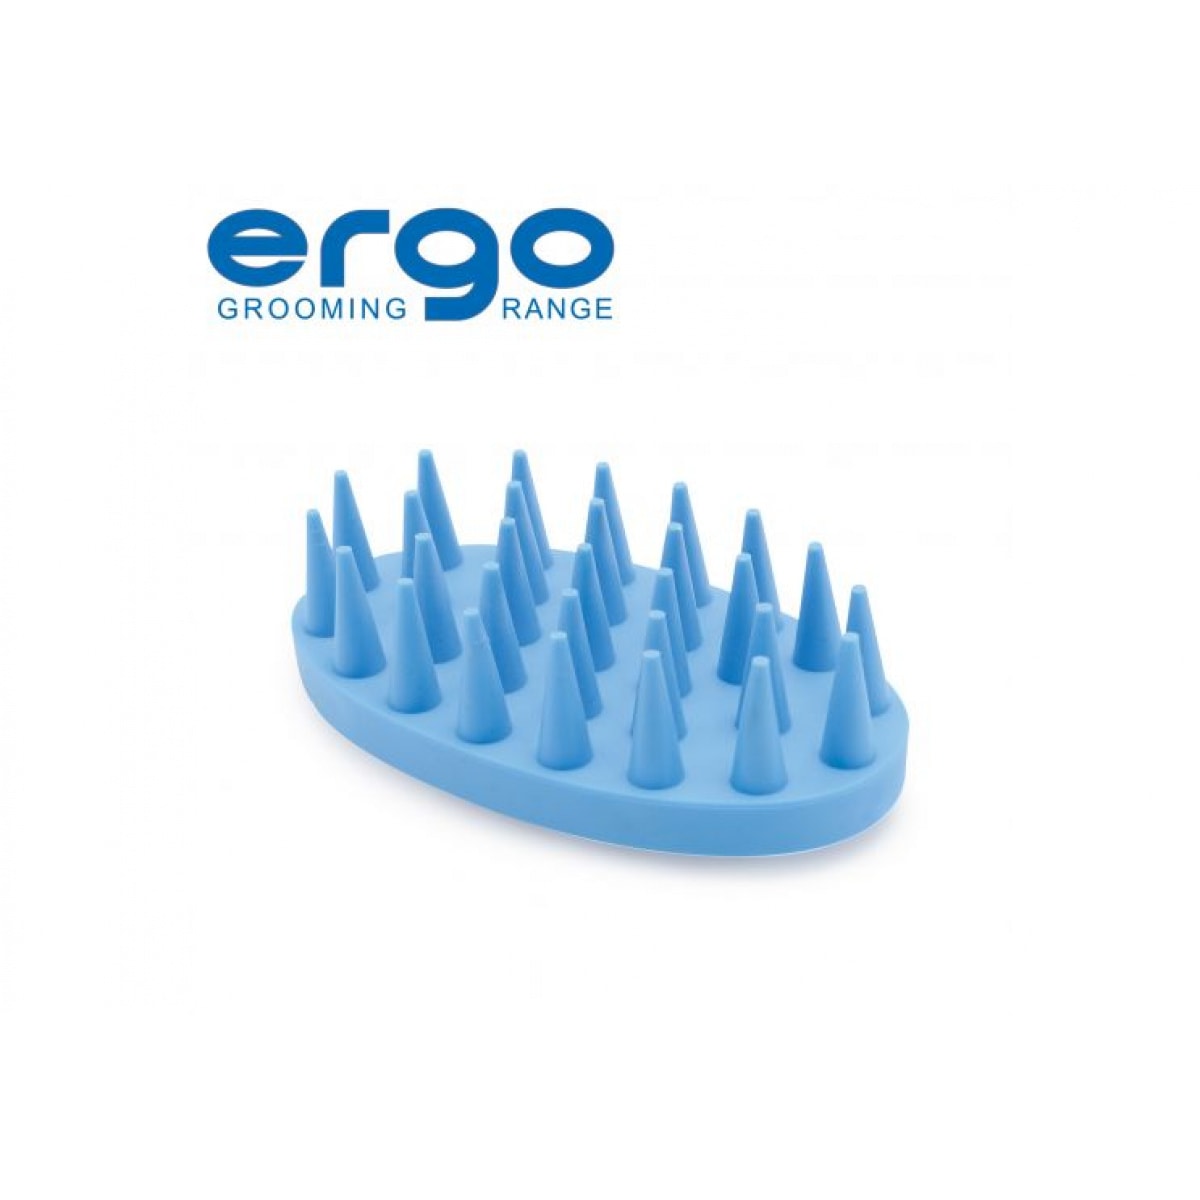 Ergo Massage Pad – Pawfect Supplies Ltd Product Image